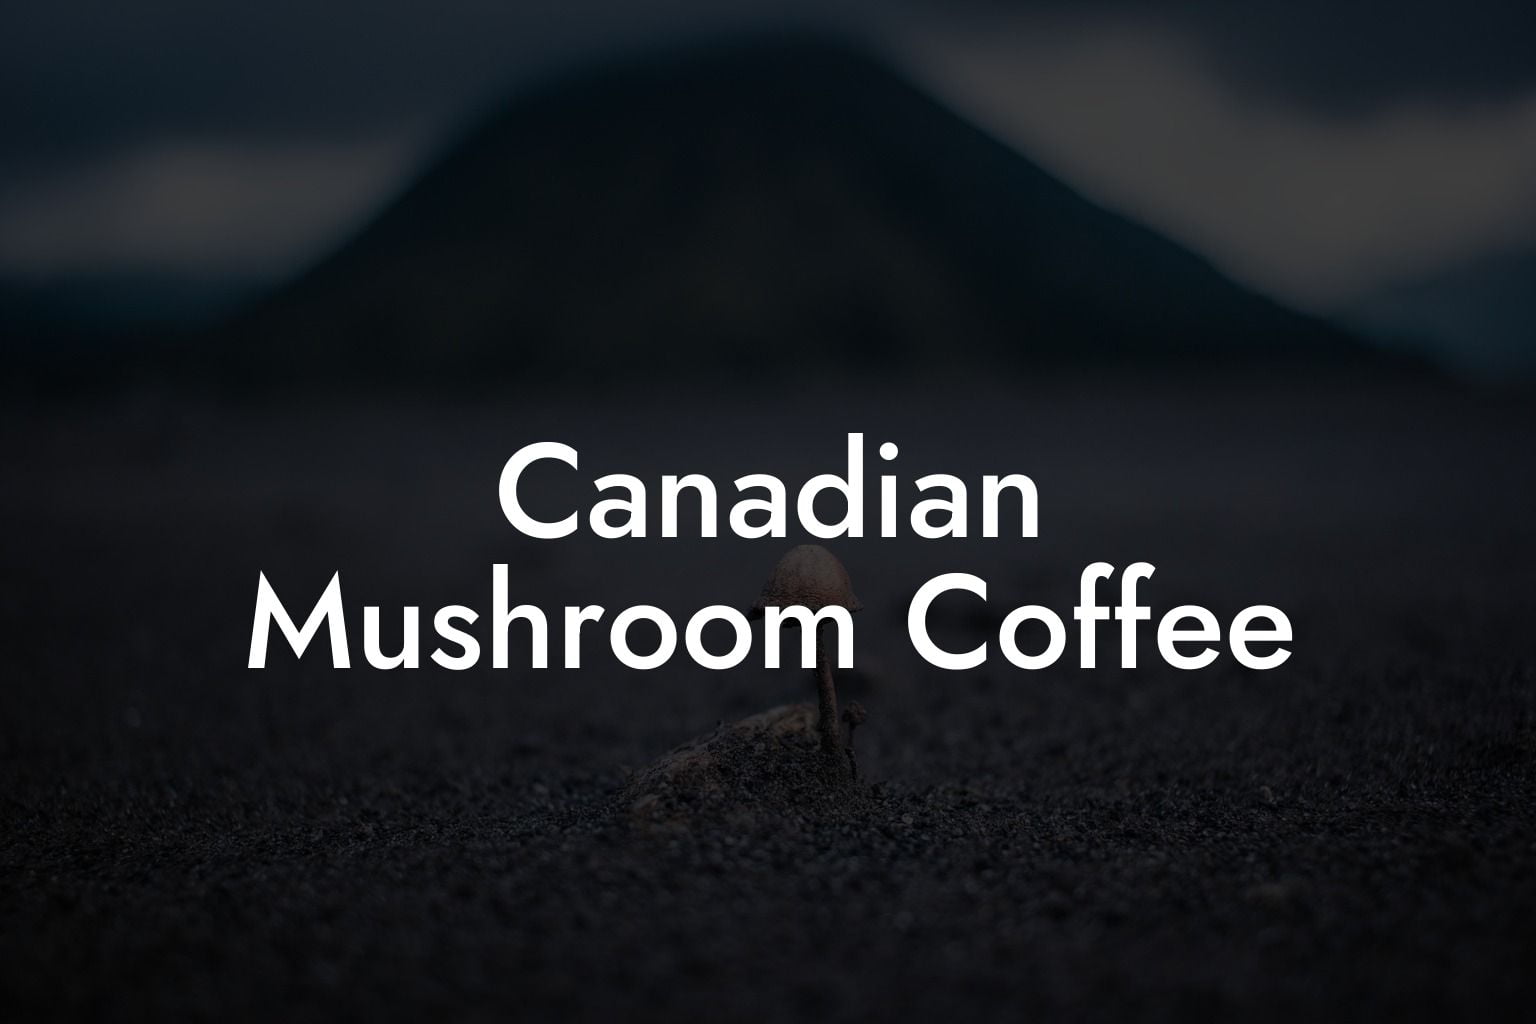 Canadian Mushroom Coffee